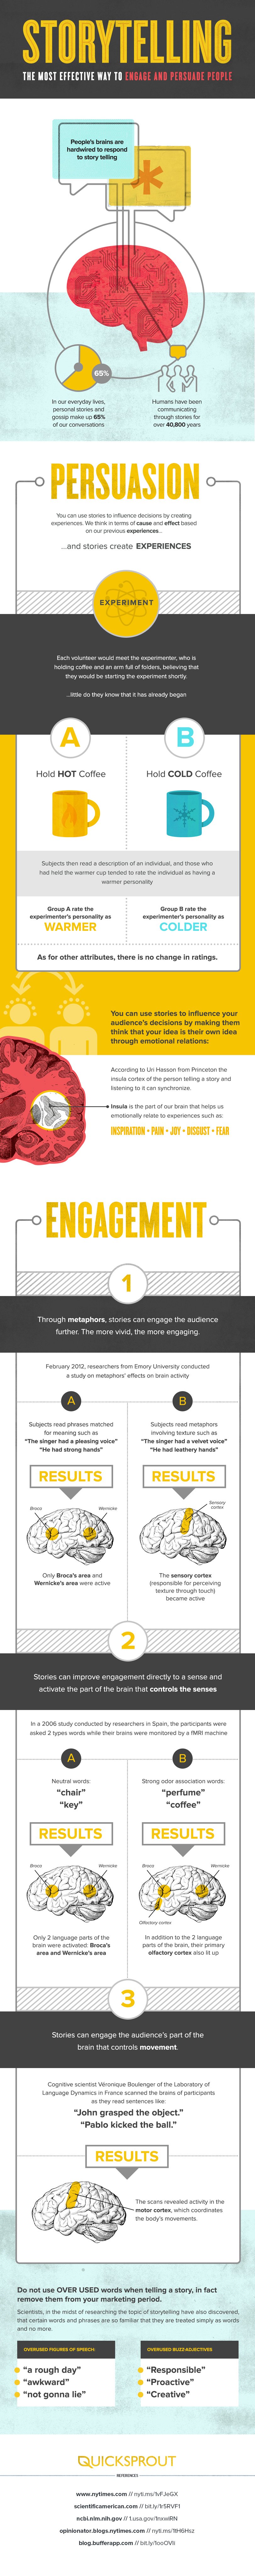 storytelling infographic